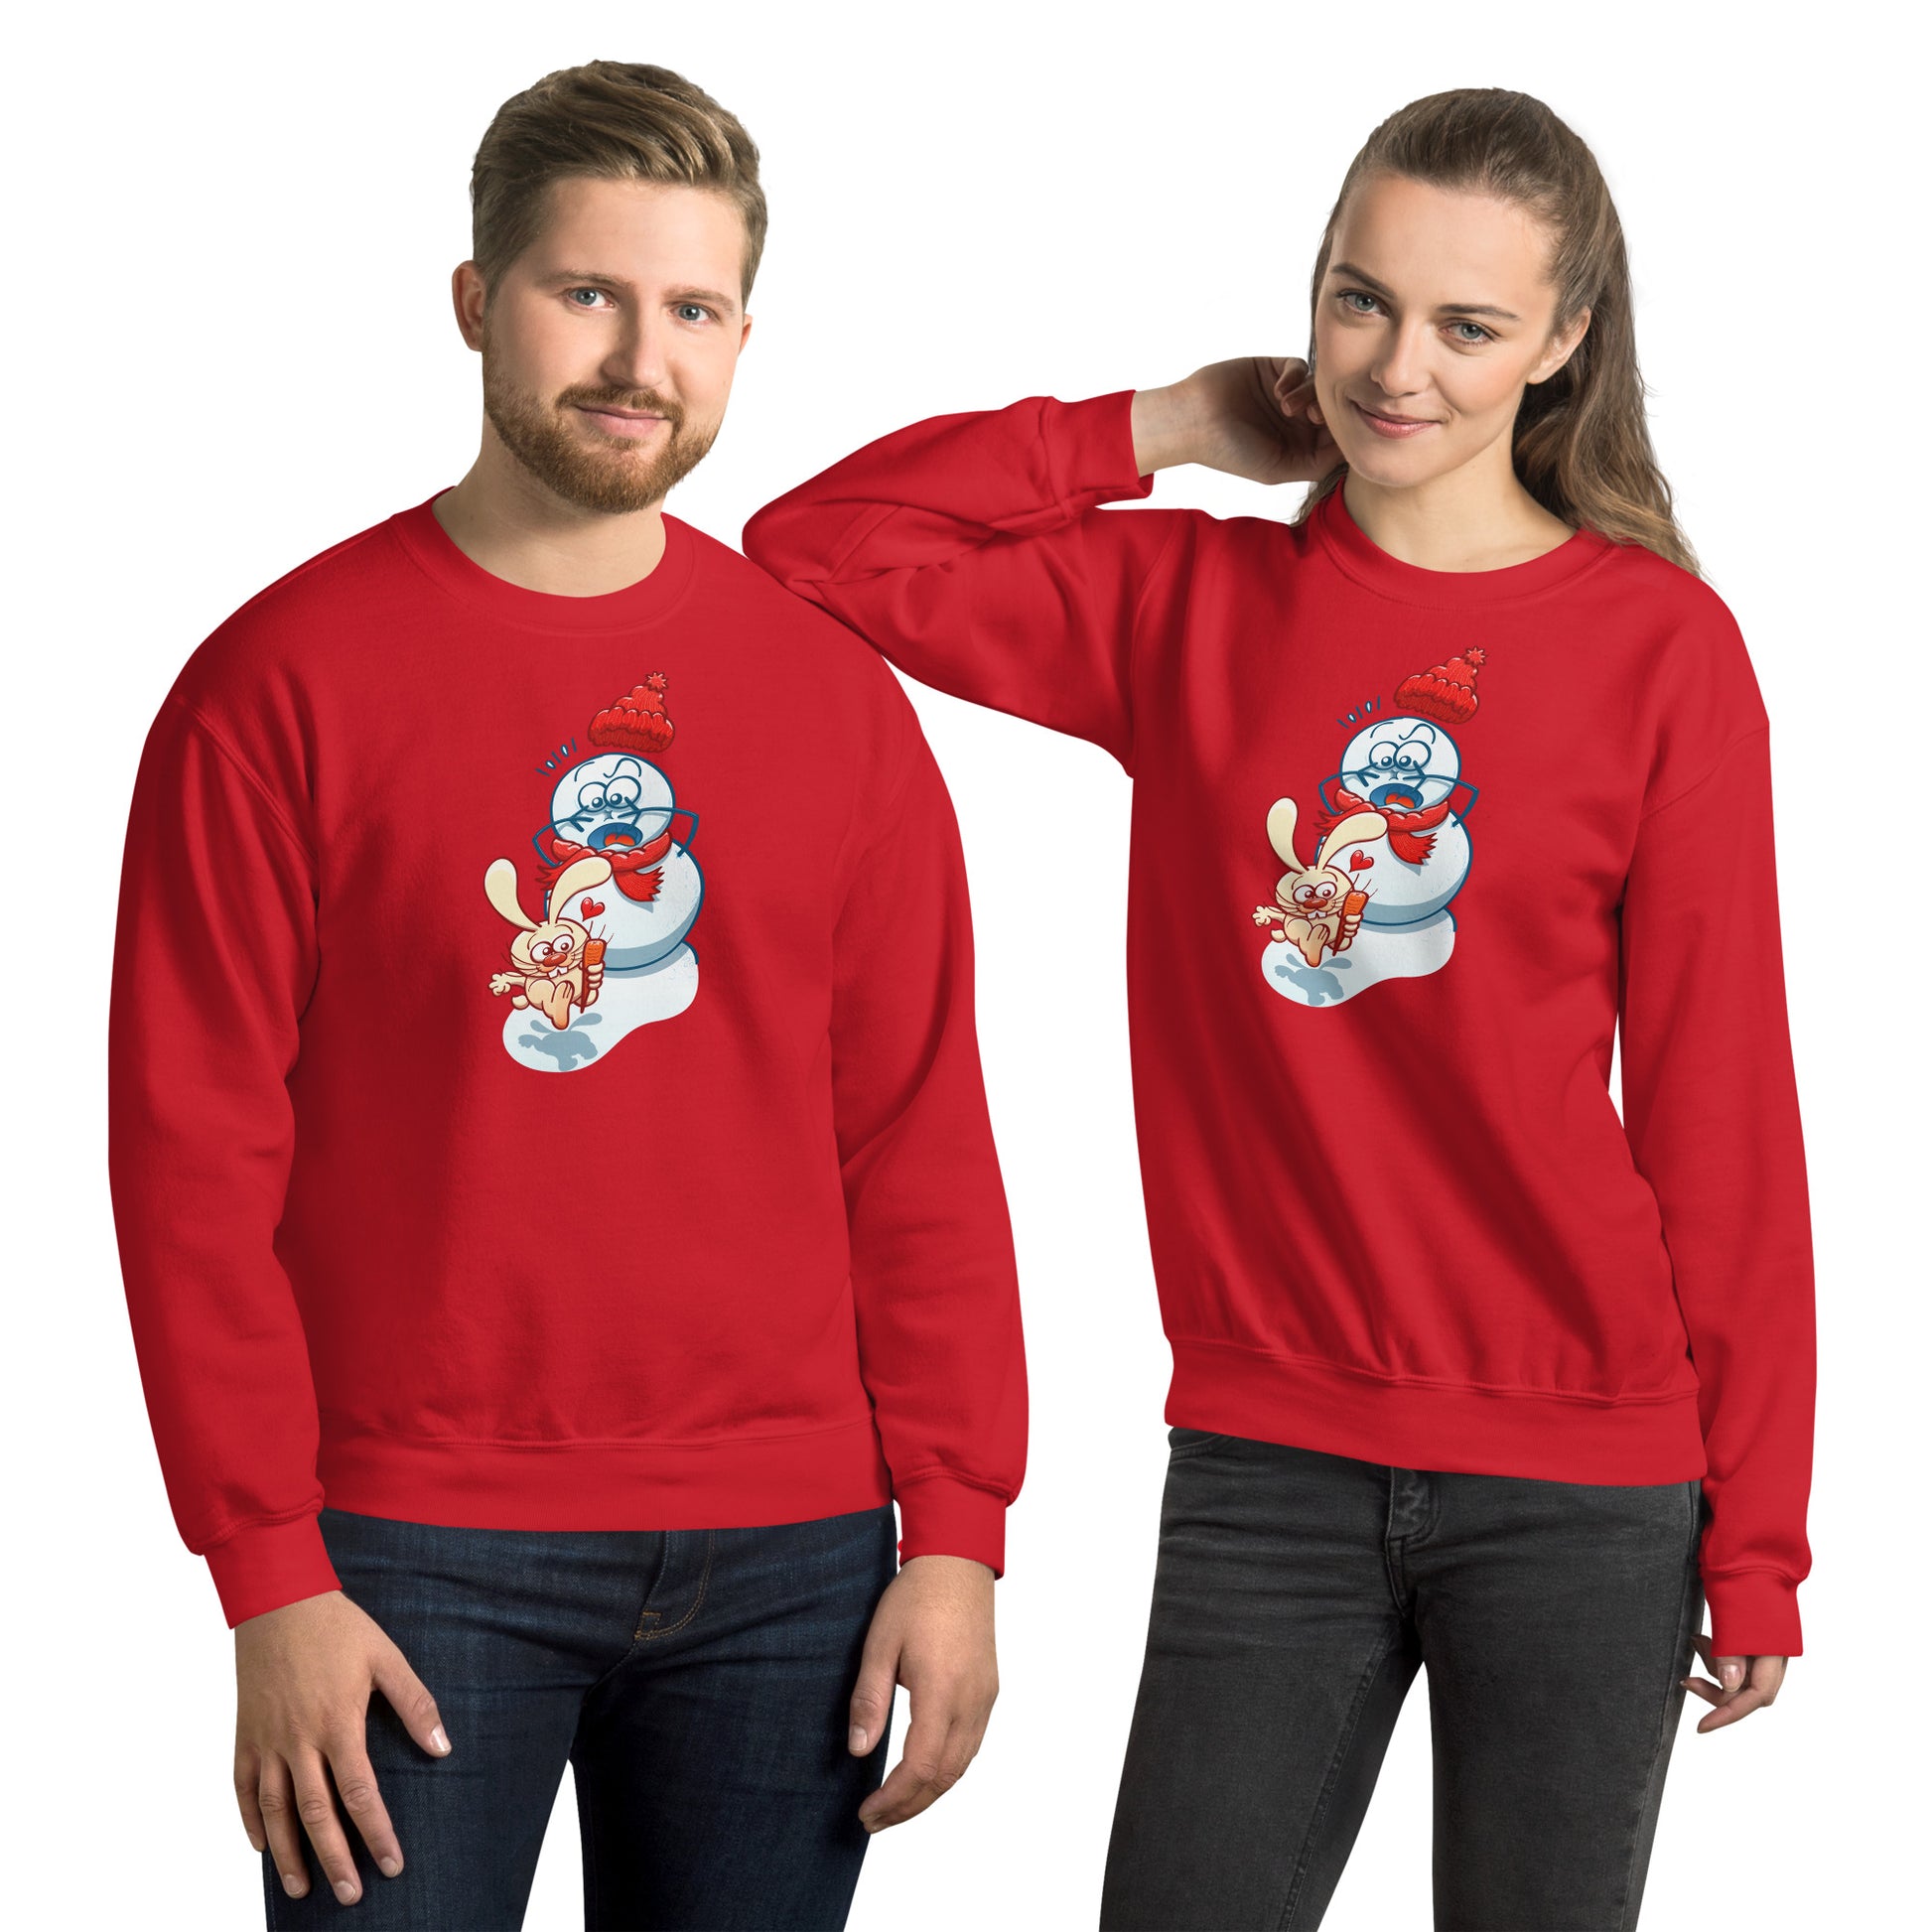 Snowman's Nose Heist: A Christmas Love Tale - Unisex Sweatshirt. Red color. Lifestyle